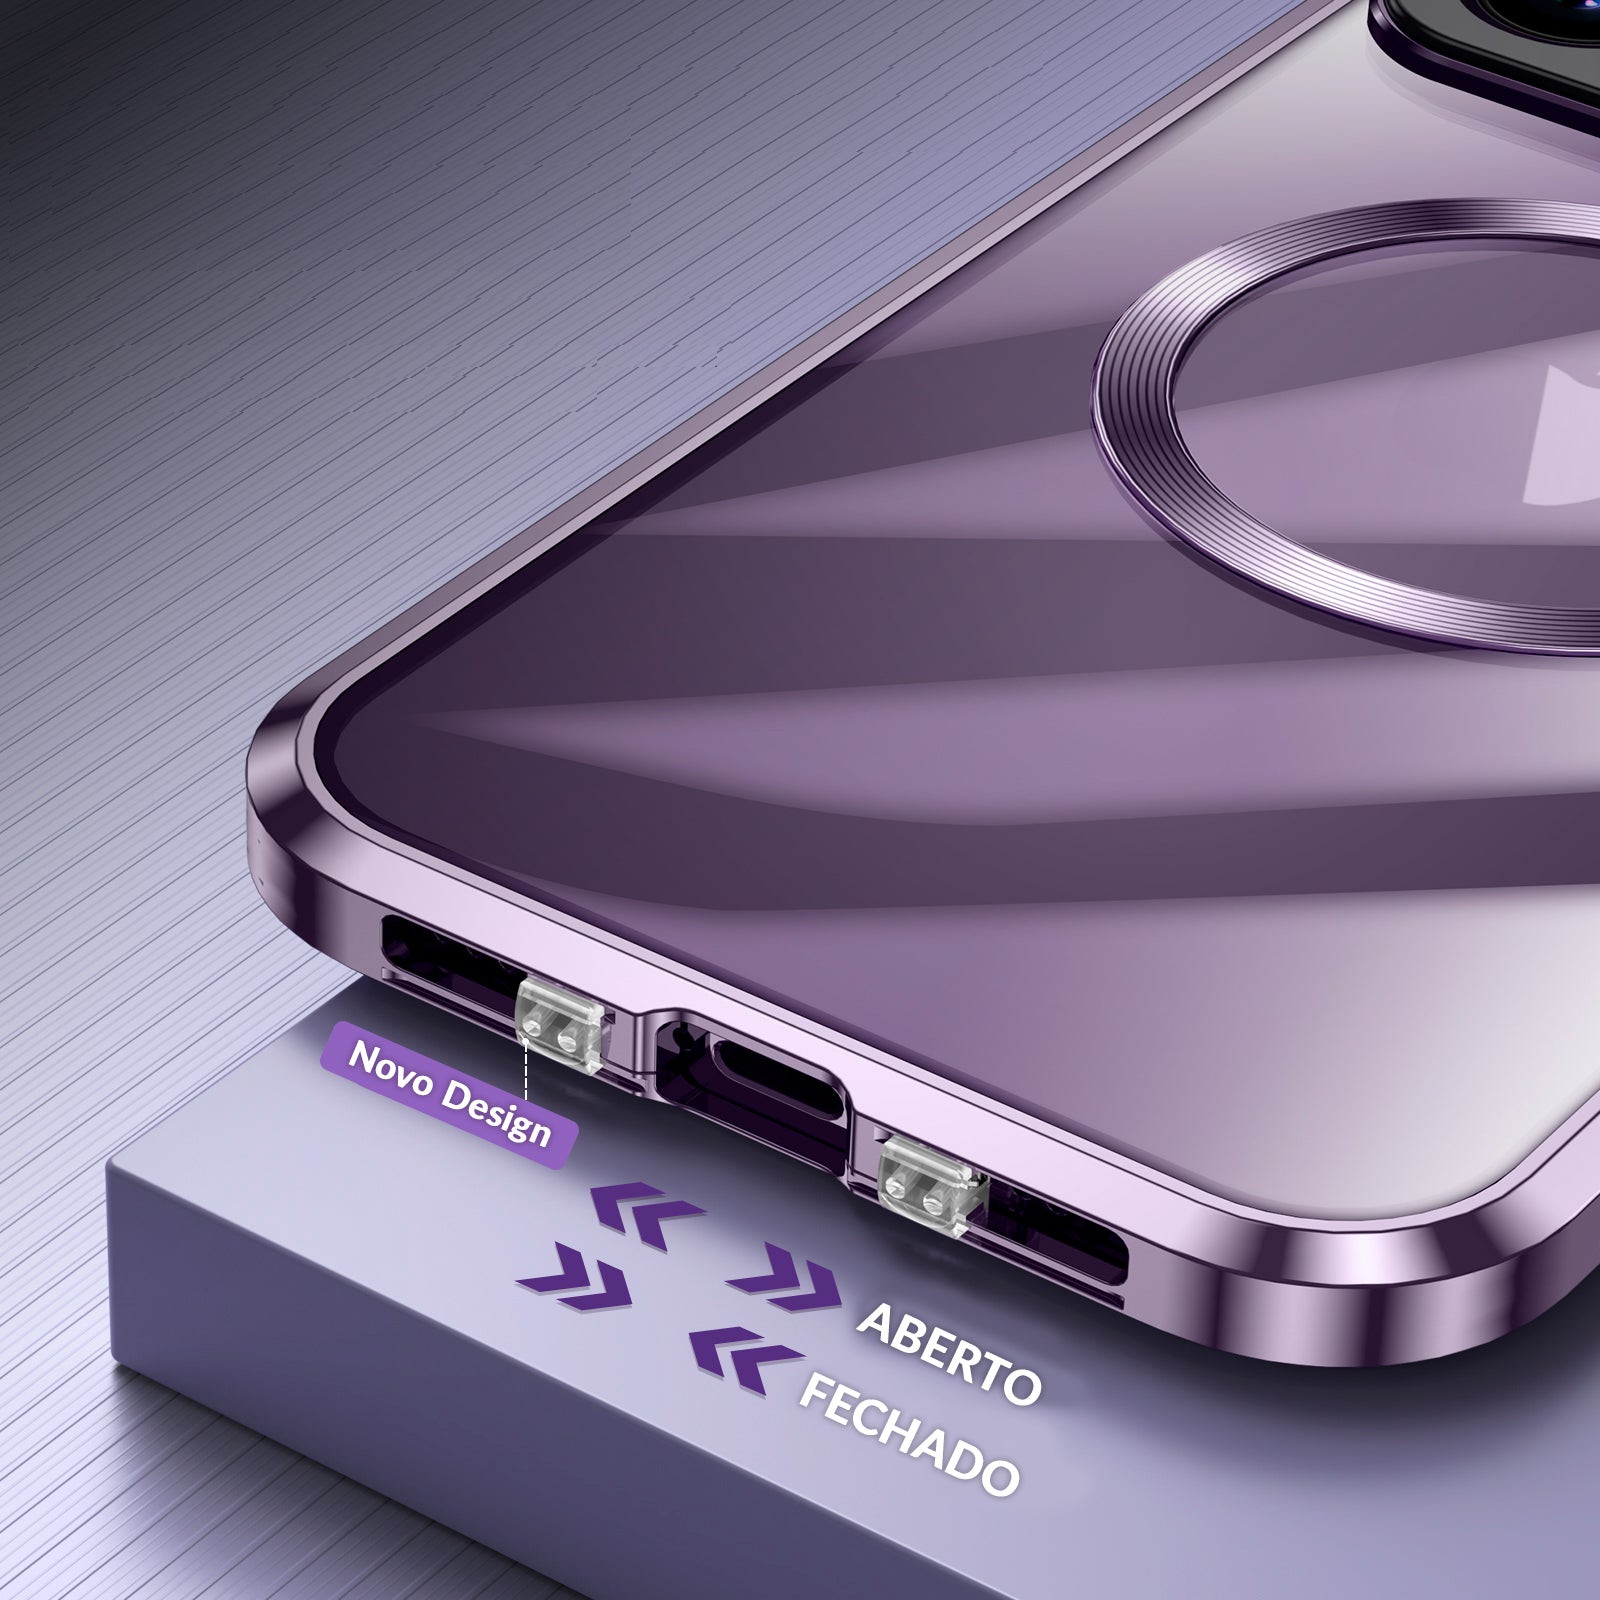 Case iPhone Magnética Blindada MagSafe - Dupla Proteção 360º